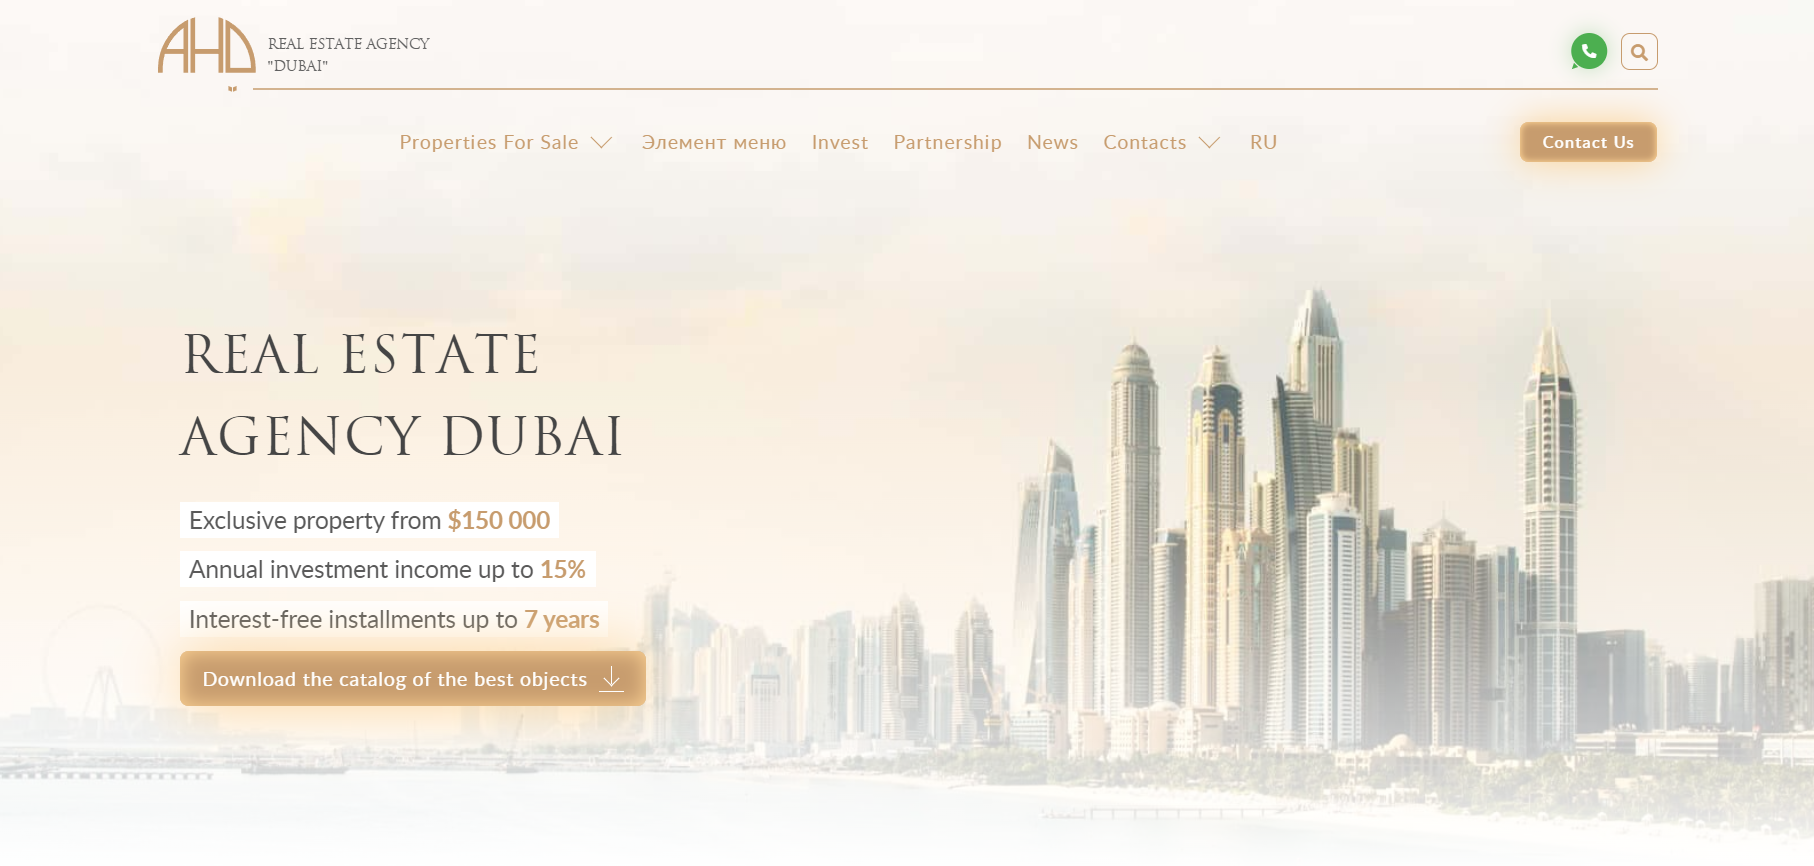 Real Estate Agency Dubai Reviews